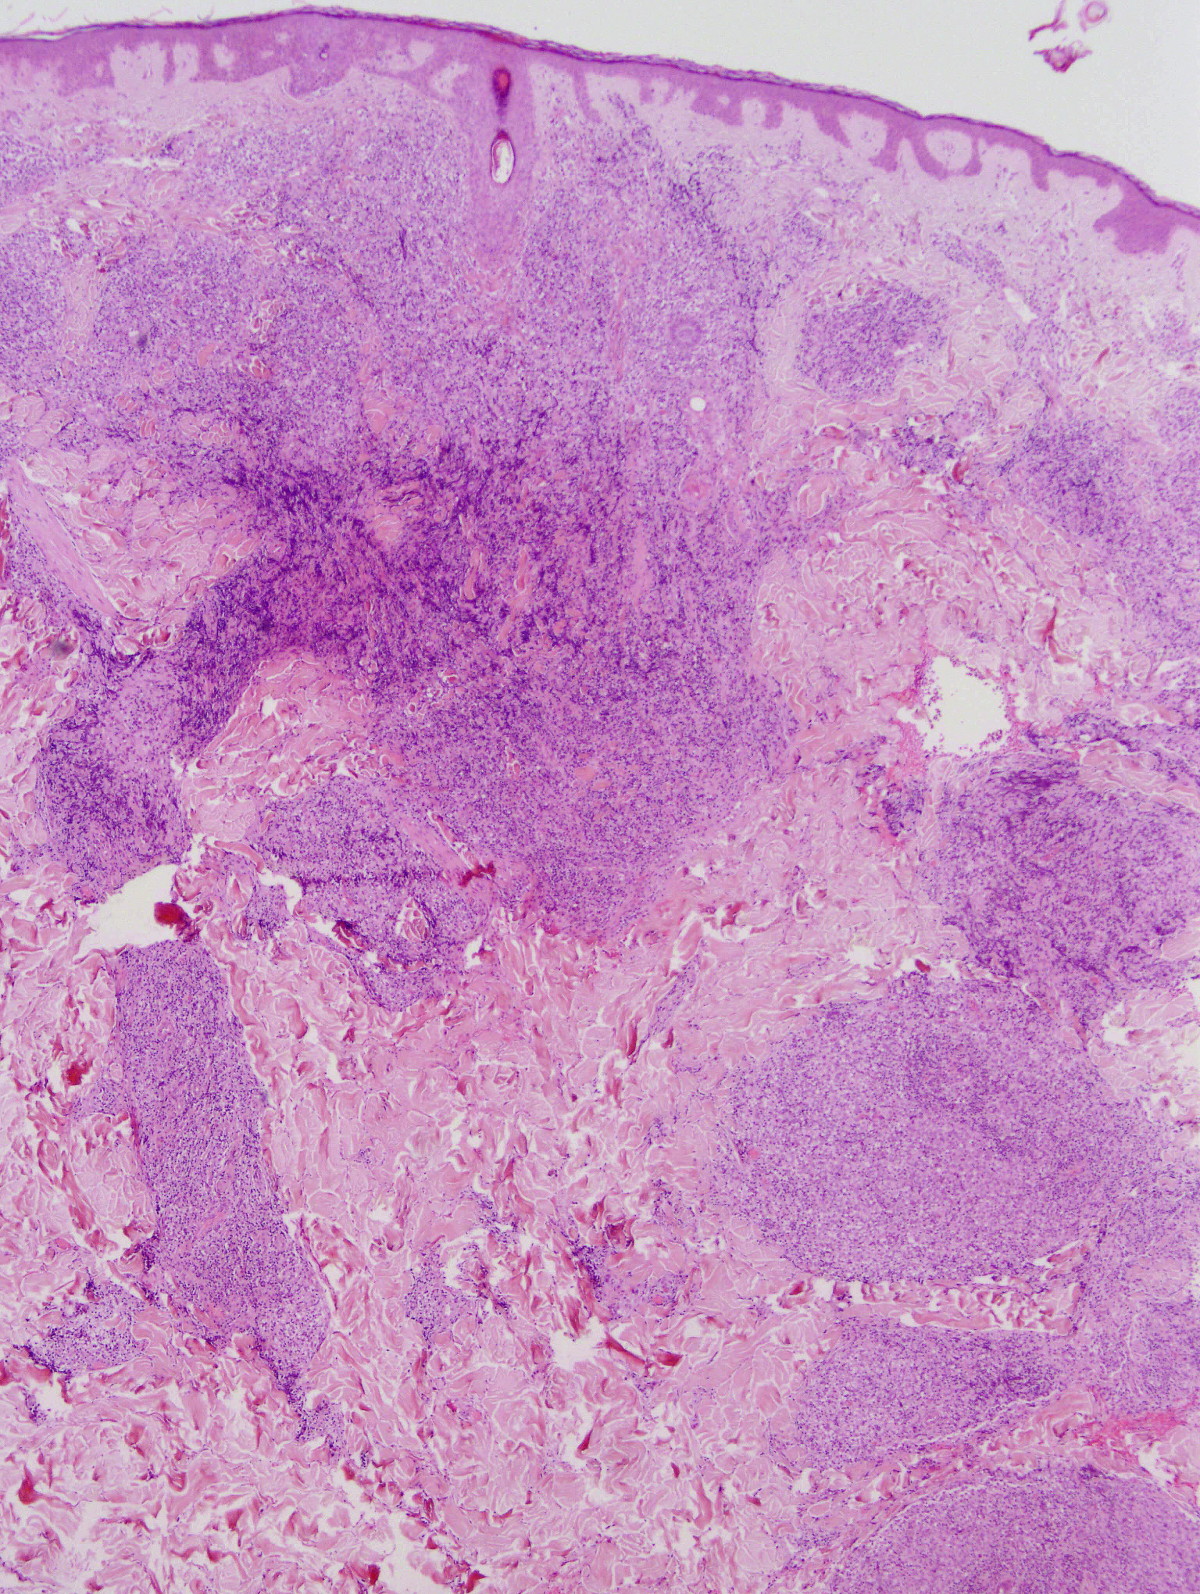 File:Primary cutaneous follicle centre lymphoma image 06.jpg